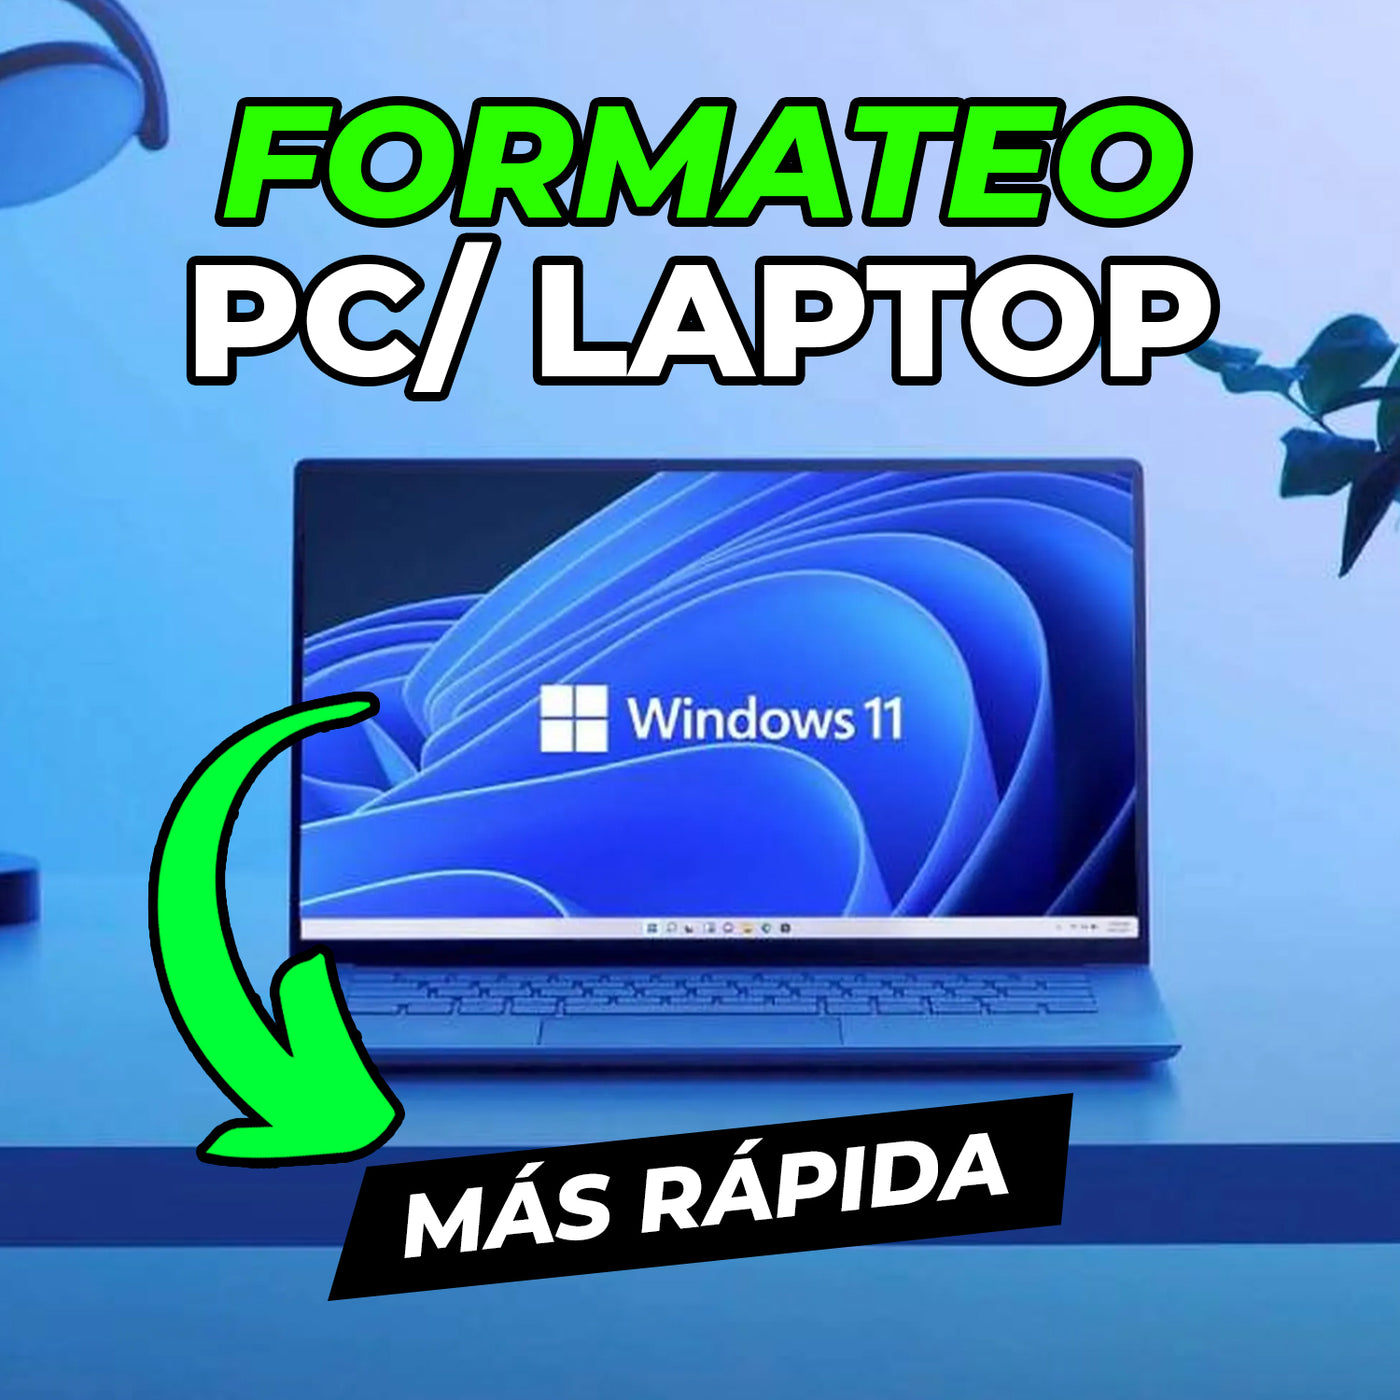 Formateo PC / Laptop